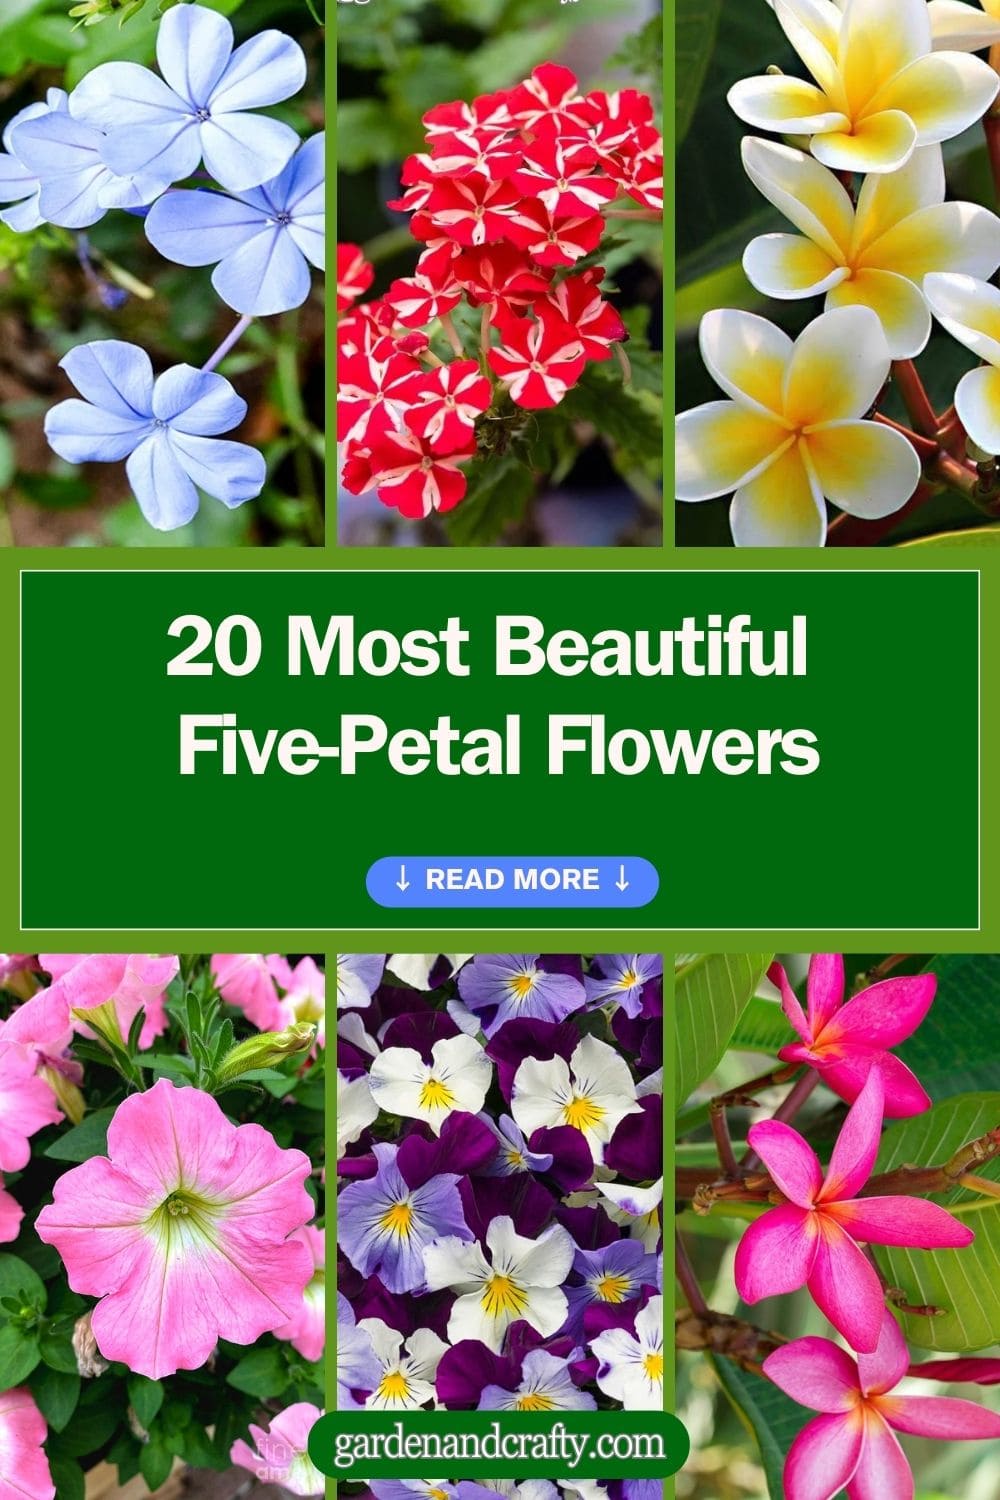 20 Most Beautiful Five-Petal Flowers